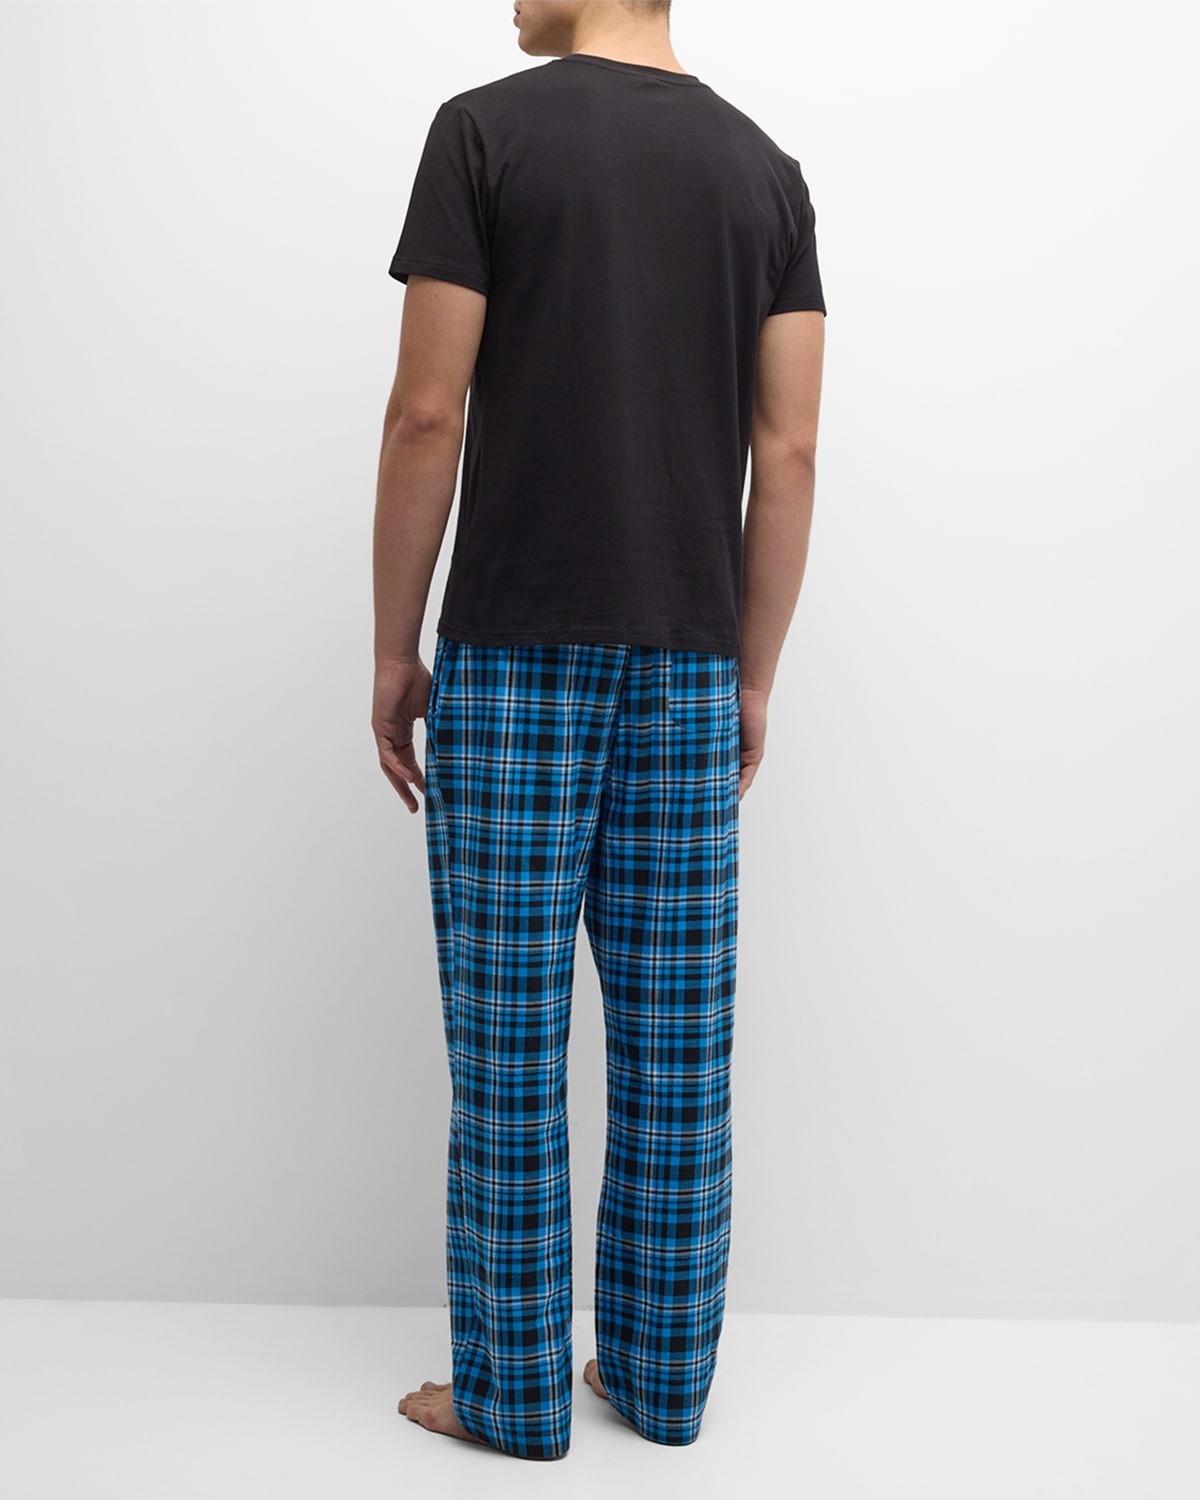 Men's Cotton Pajama Set - 4